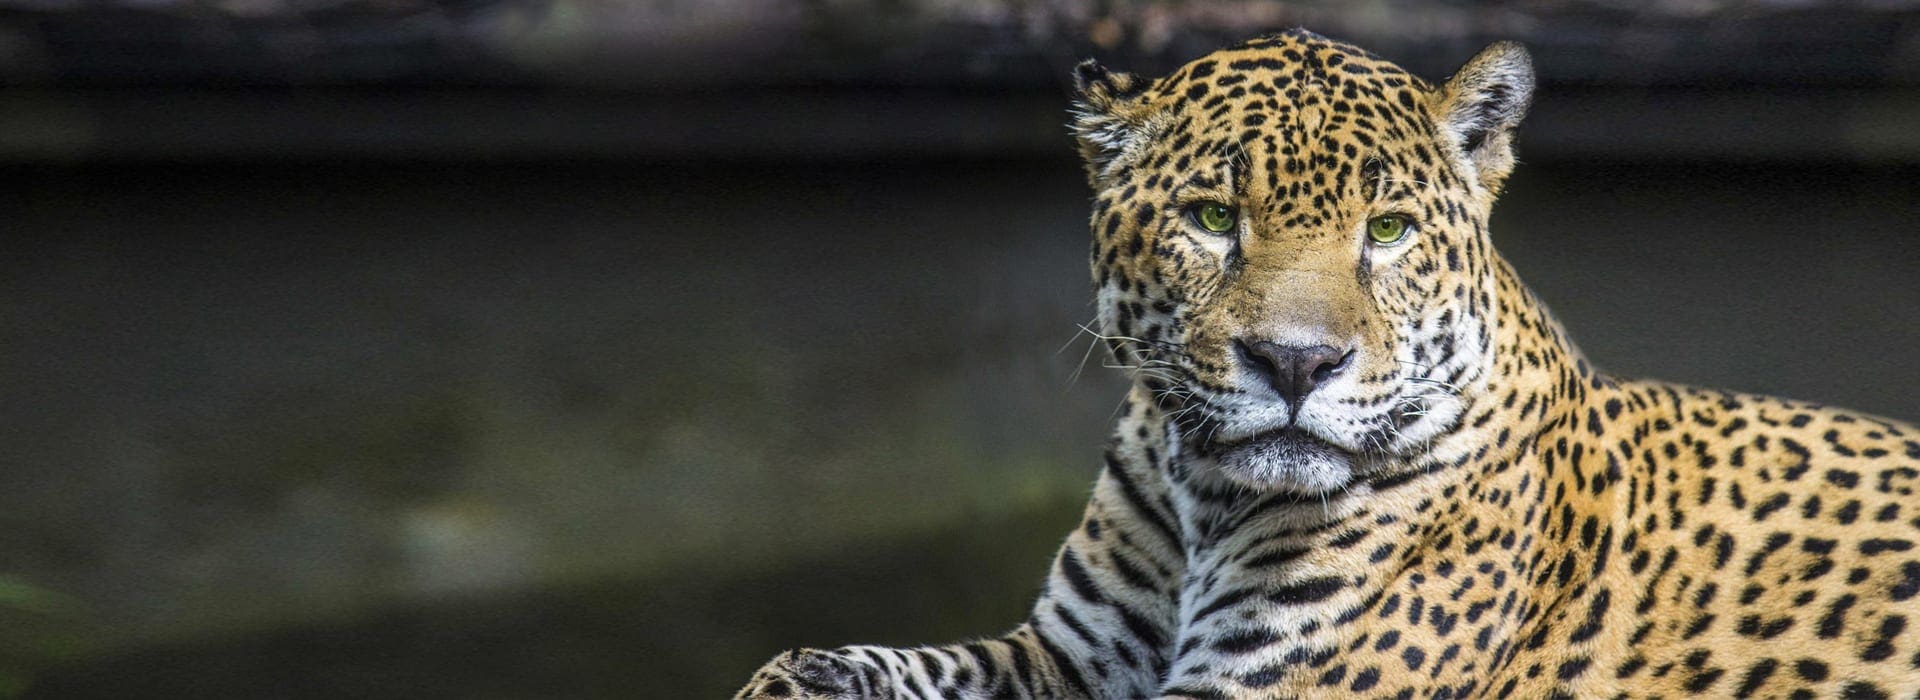 A jaguar is gazing outside.